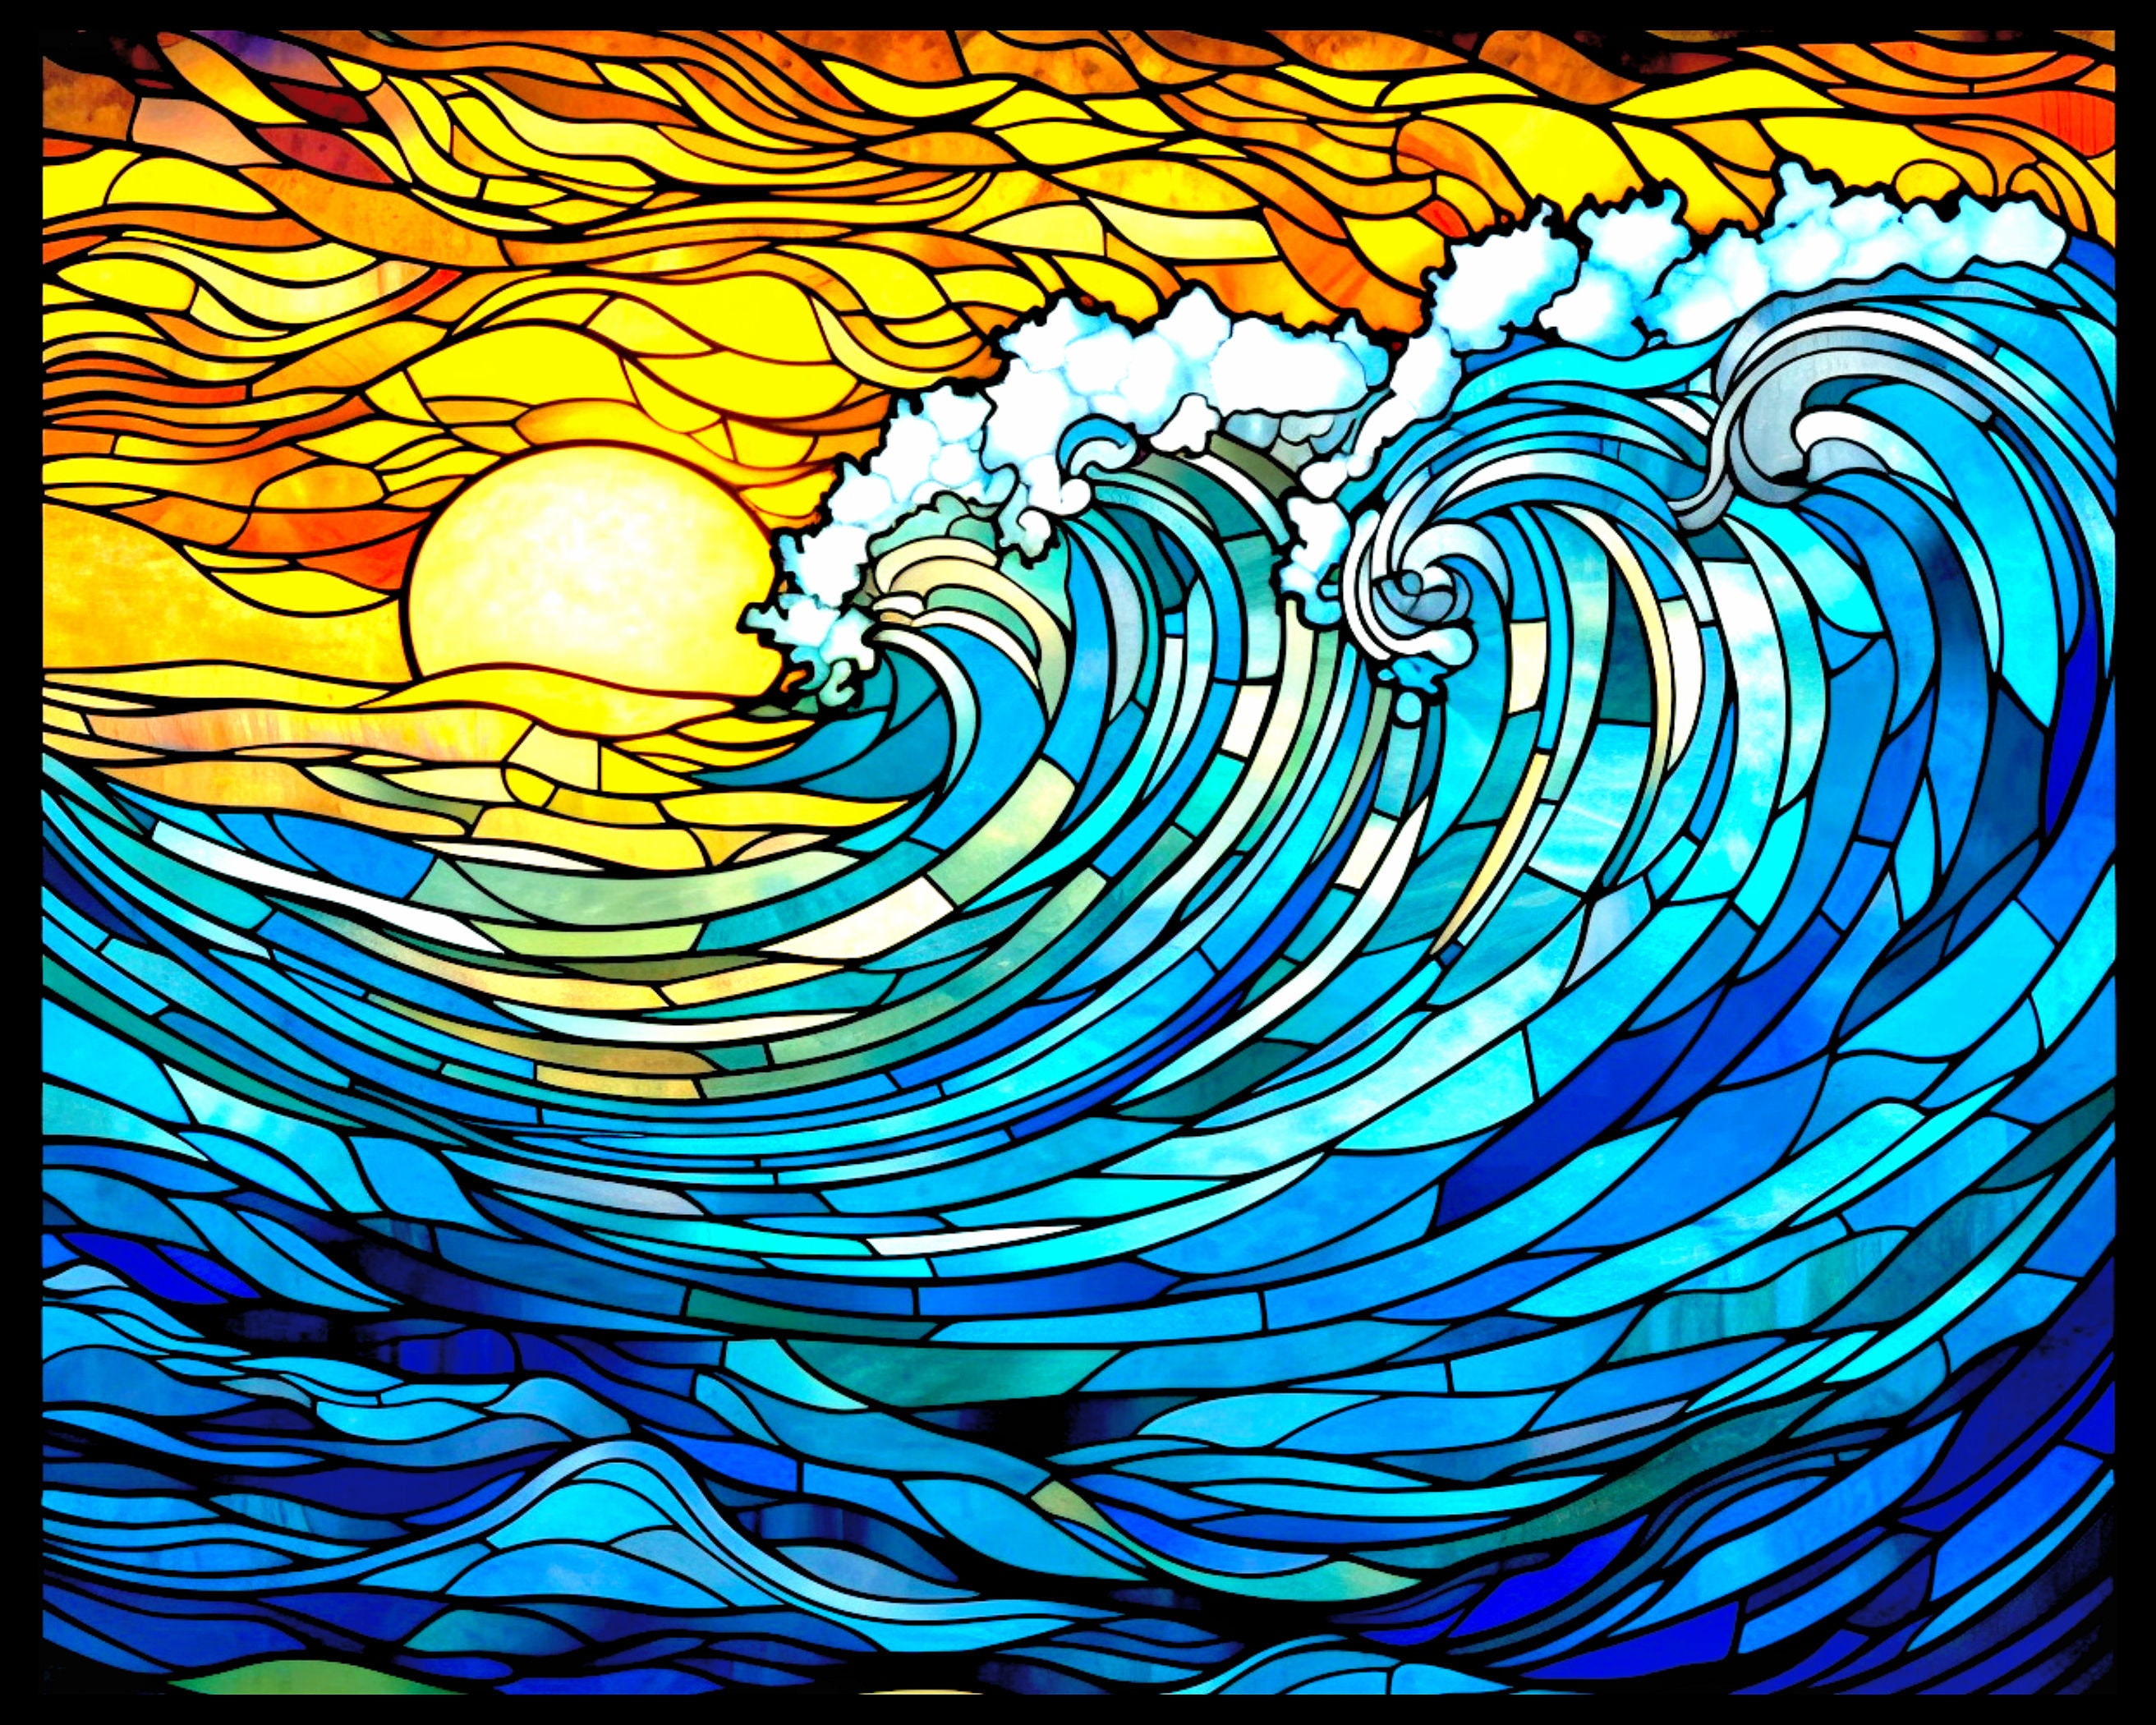 Sunrise over high ocean waves stained glass pattern print download ocean sunrise digital art jpg file x dpi ocean coloring book